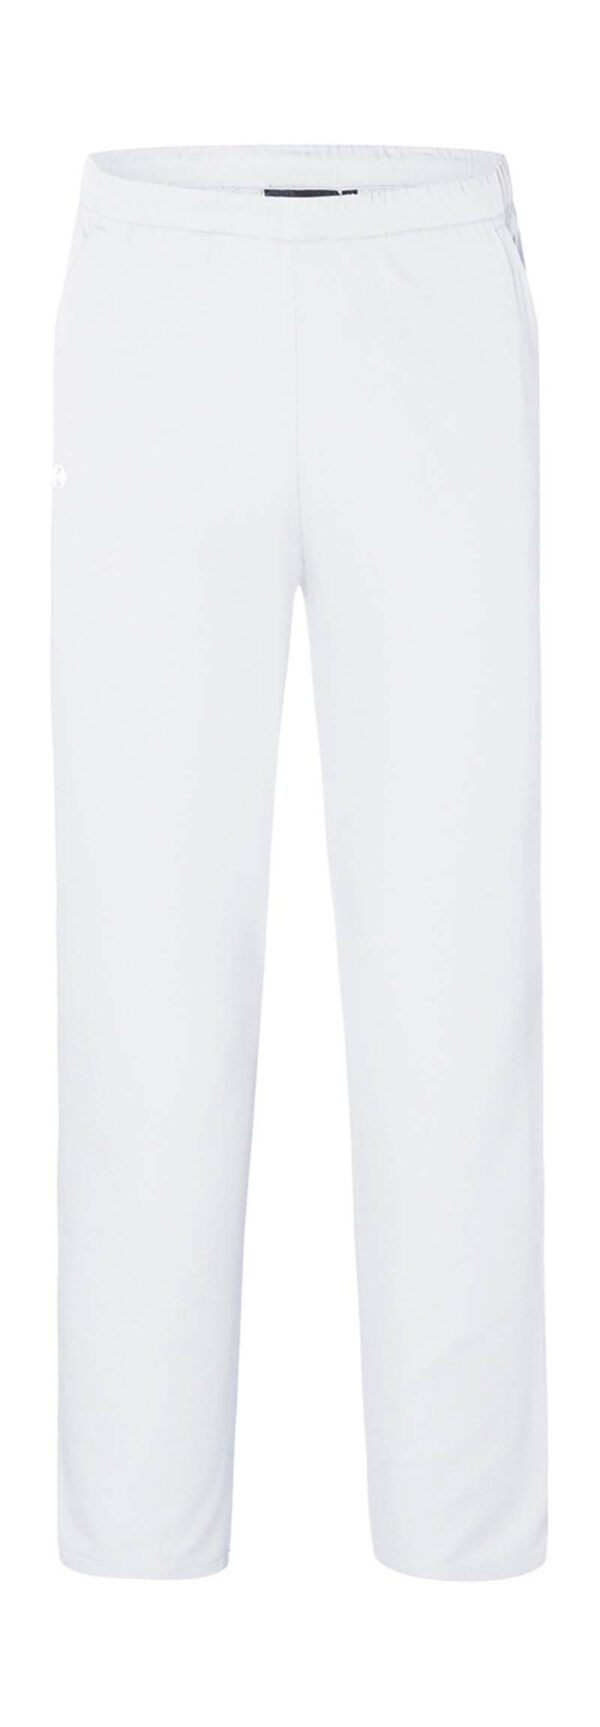 Slip on Trousers Essential Kleur White